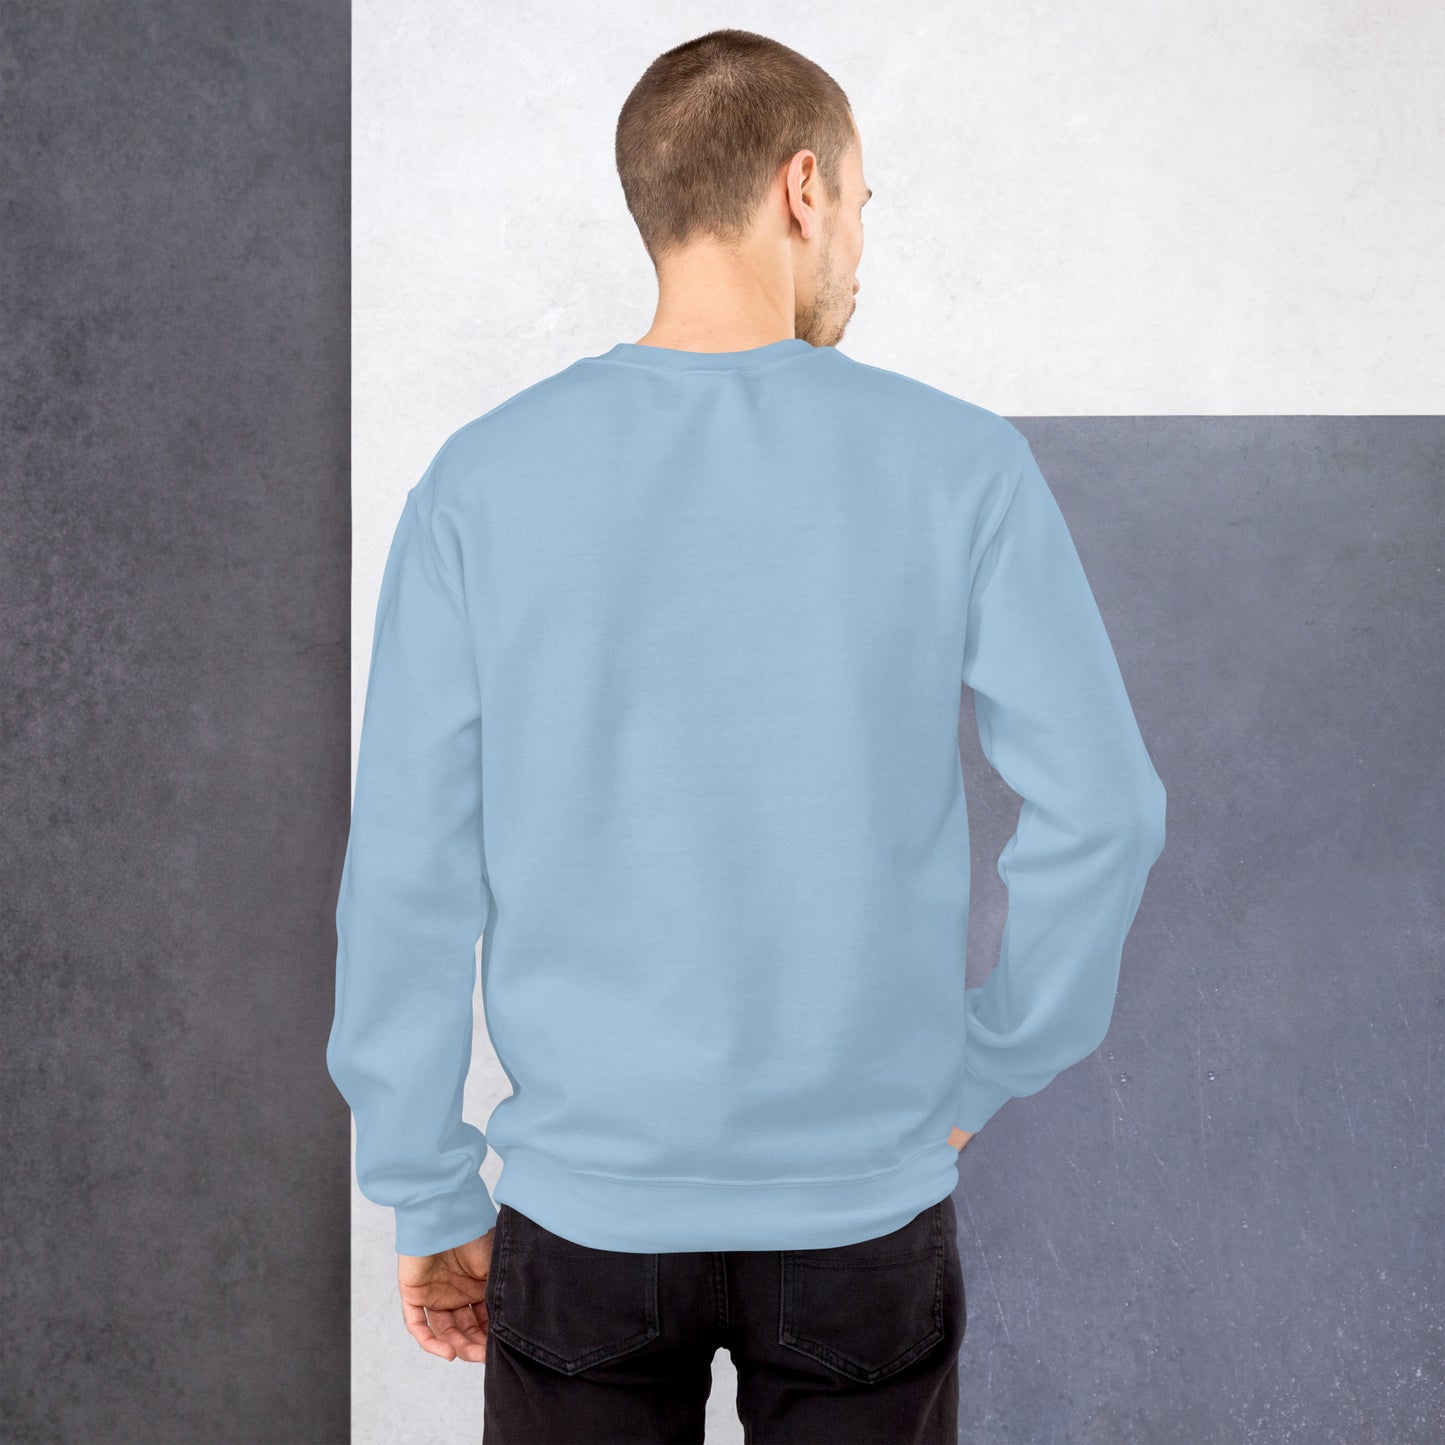 Tengritagh Unisex Sweatshirt for man